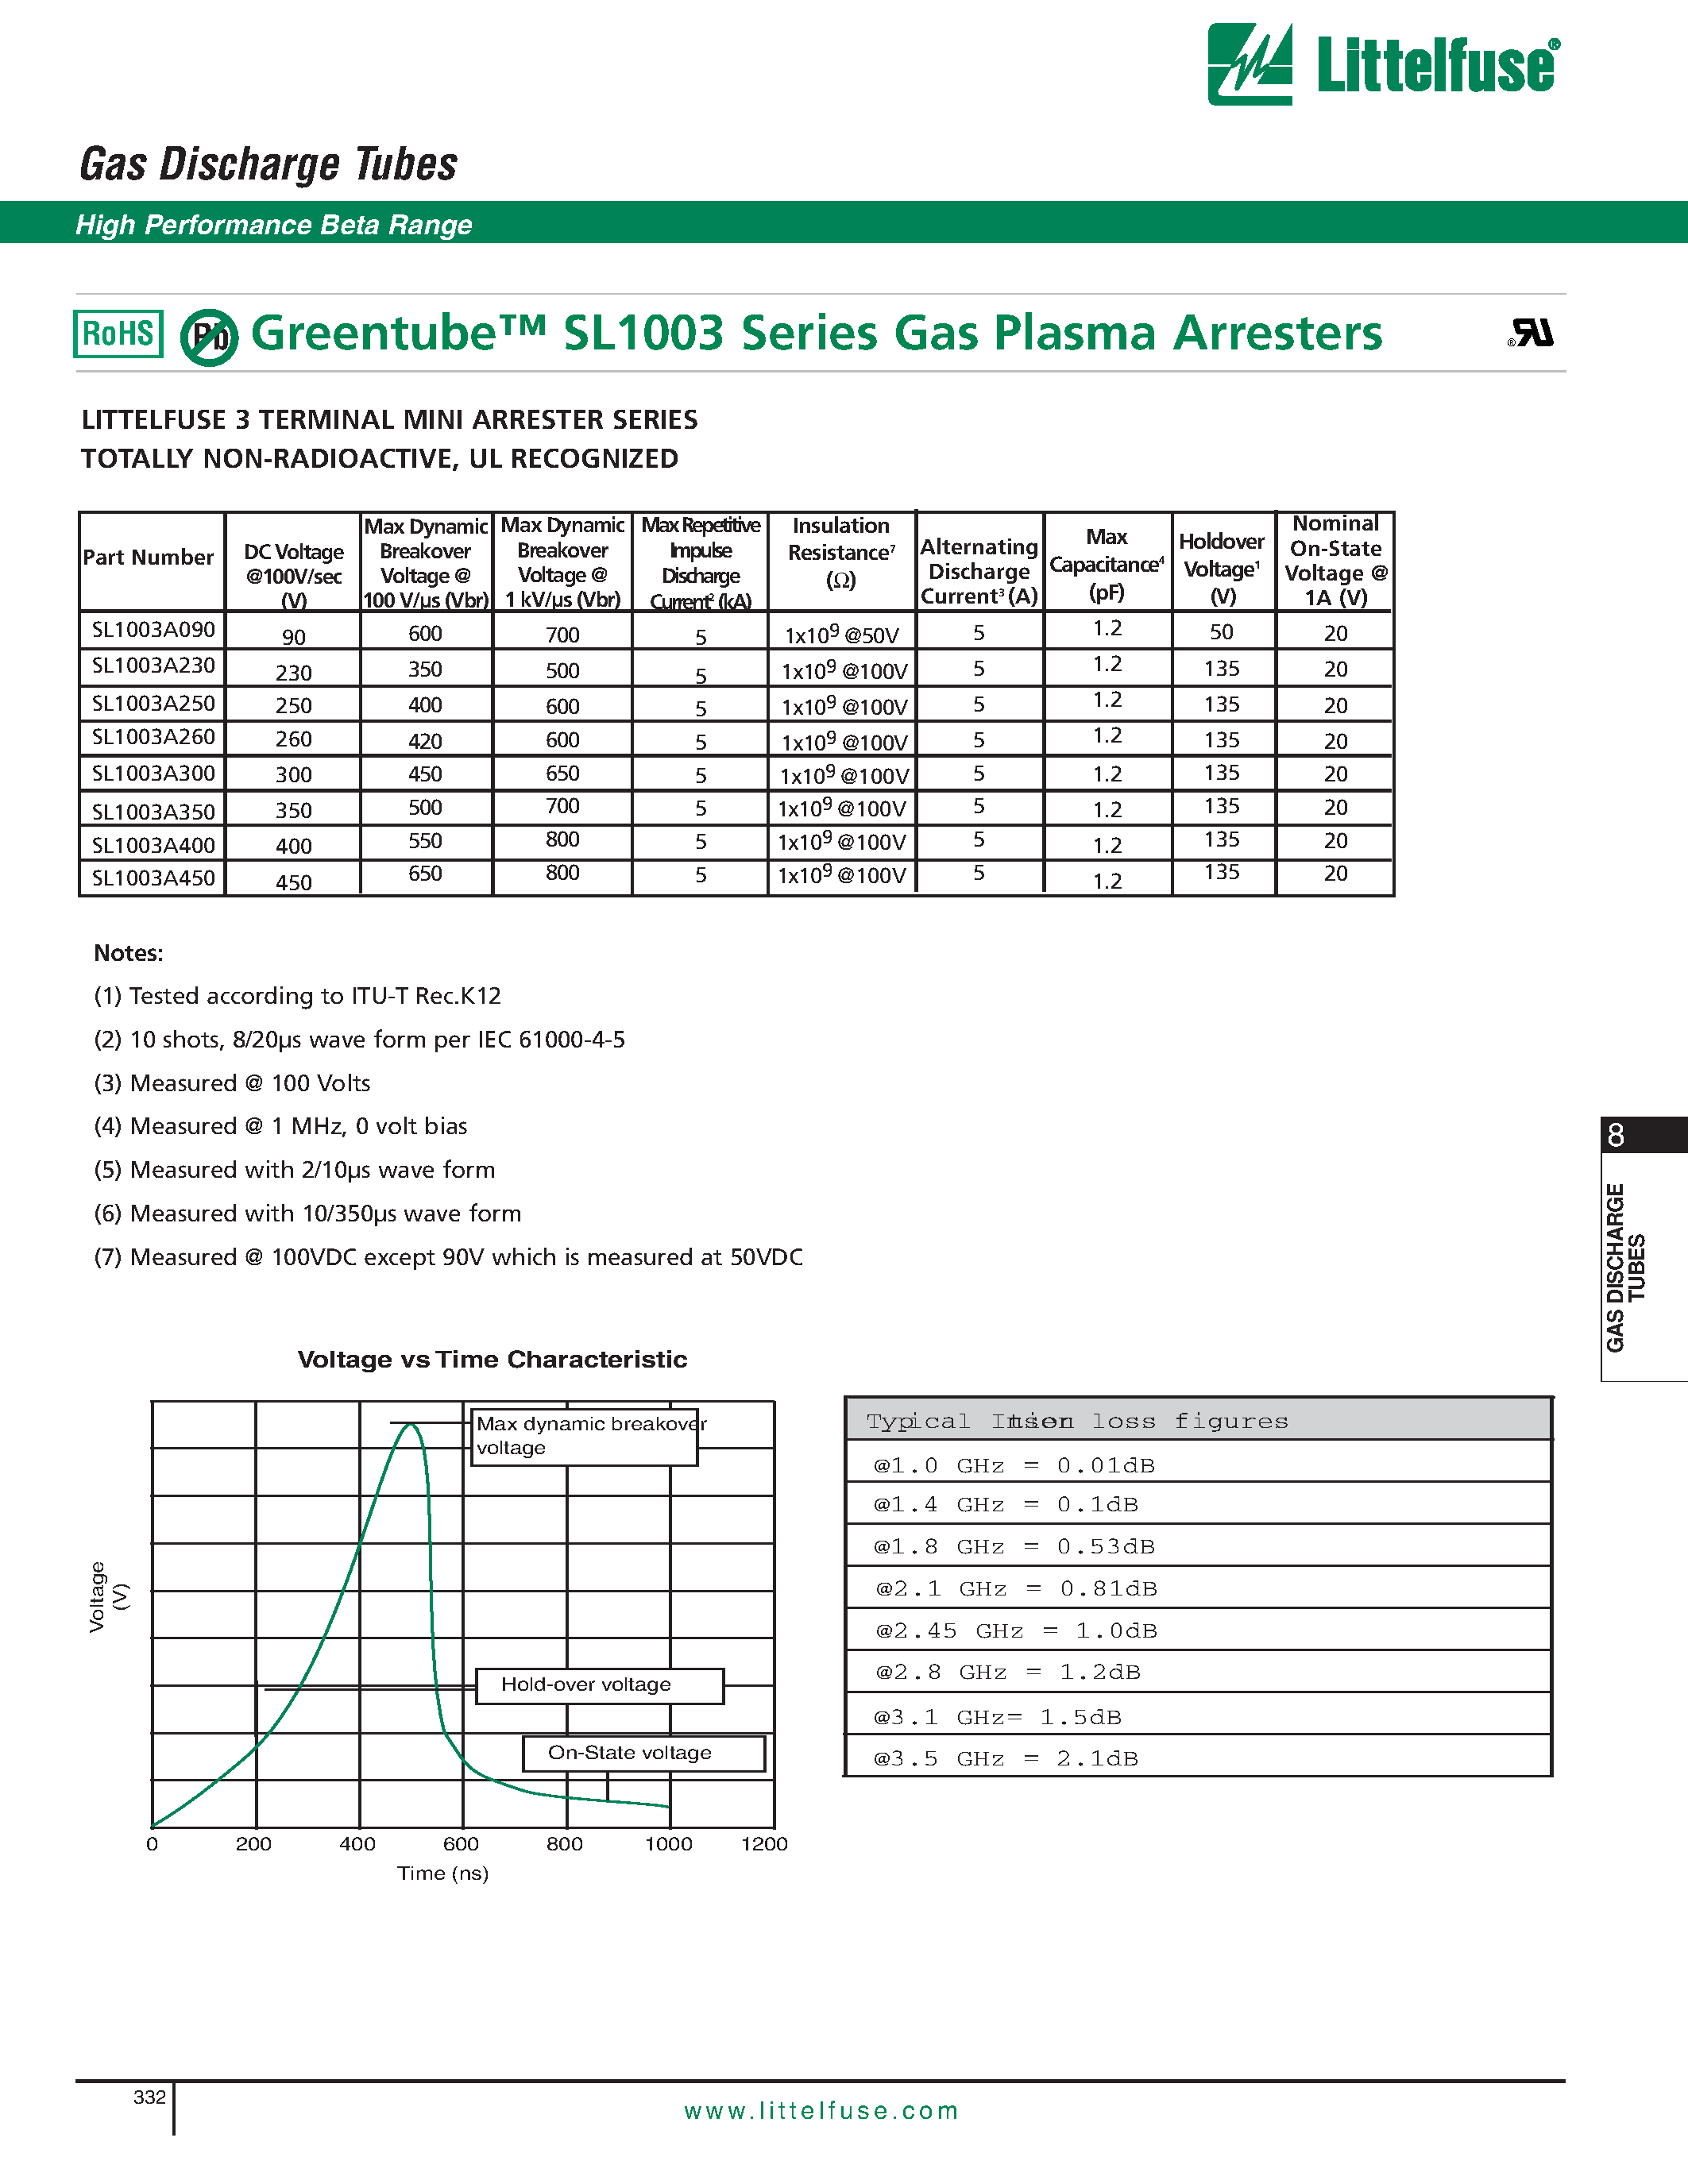 Datasheet SL1003A260 - Greentube SL1003 Series Gas Plasma Arresters page 2